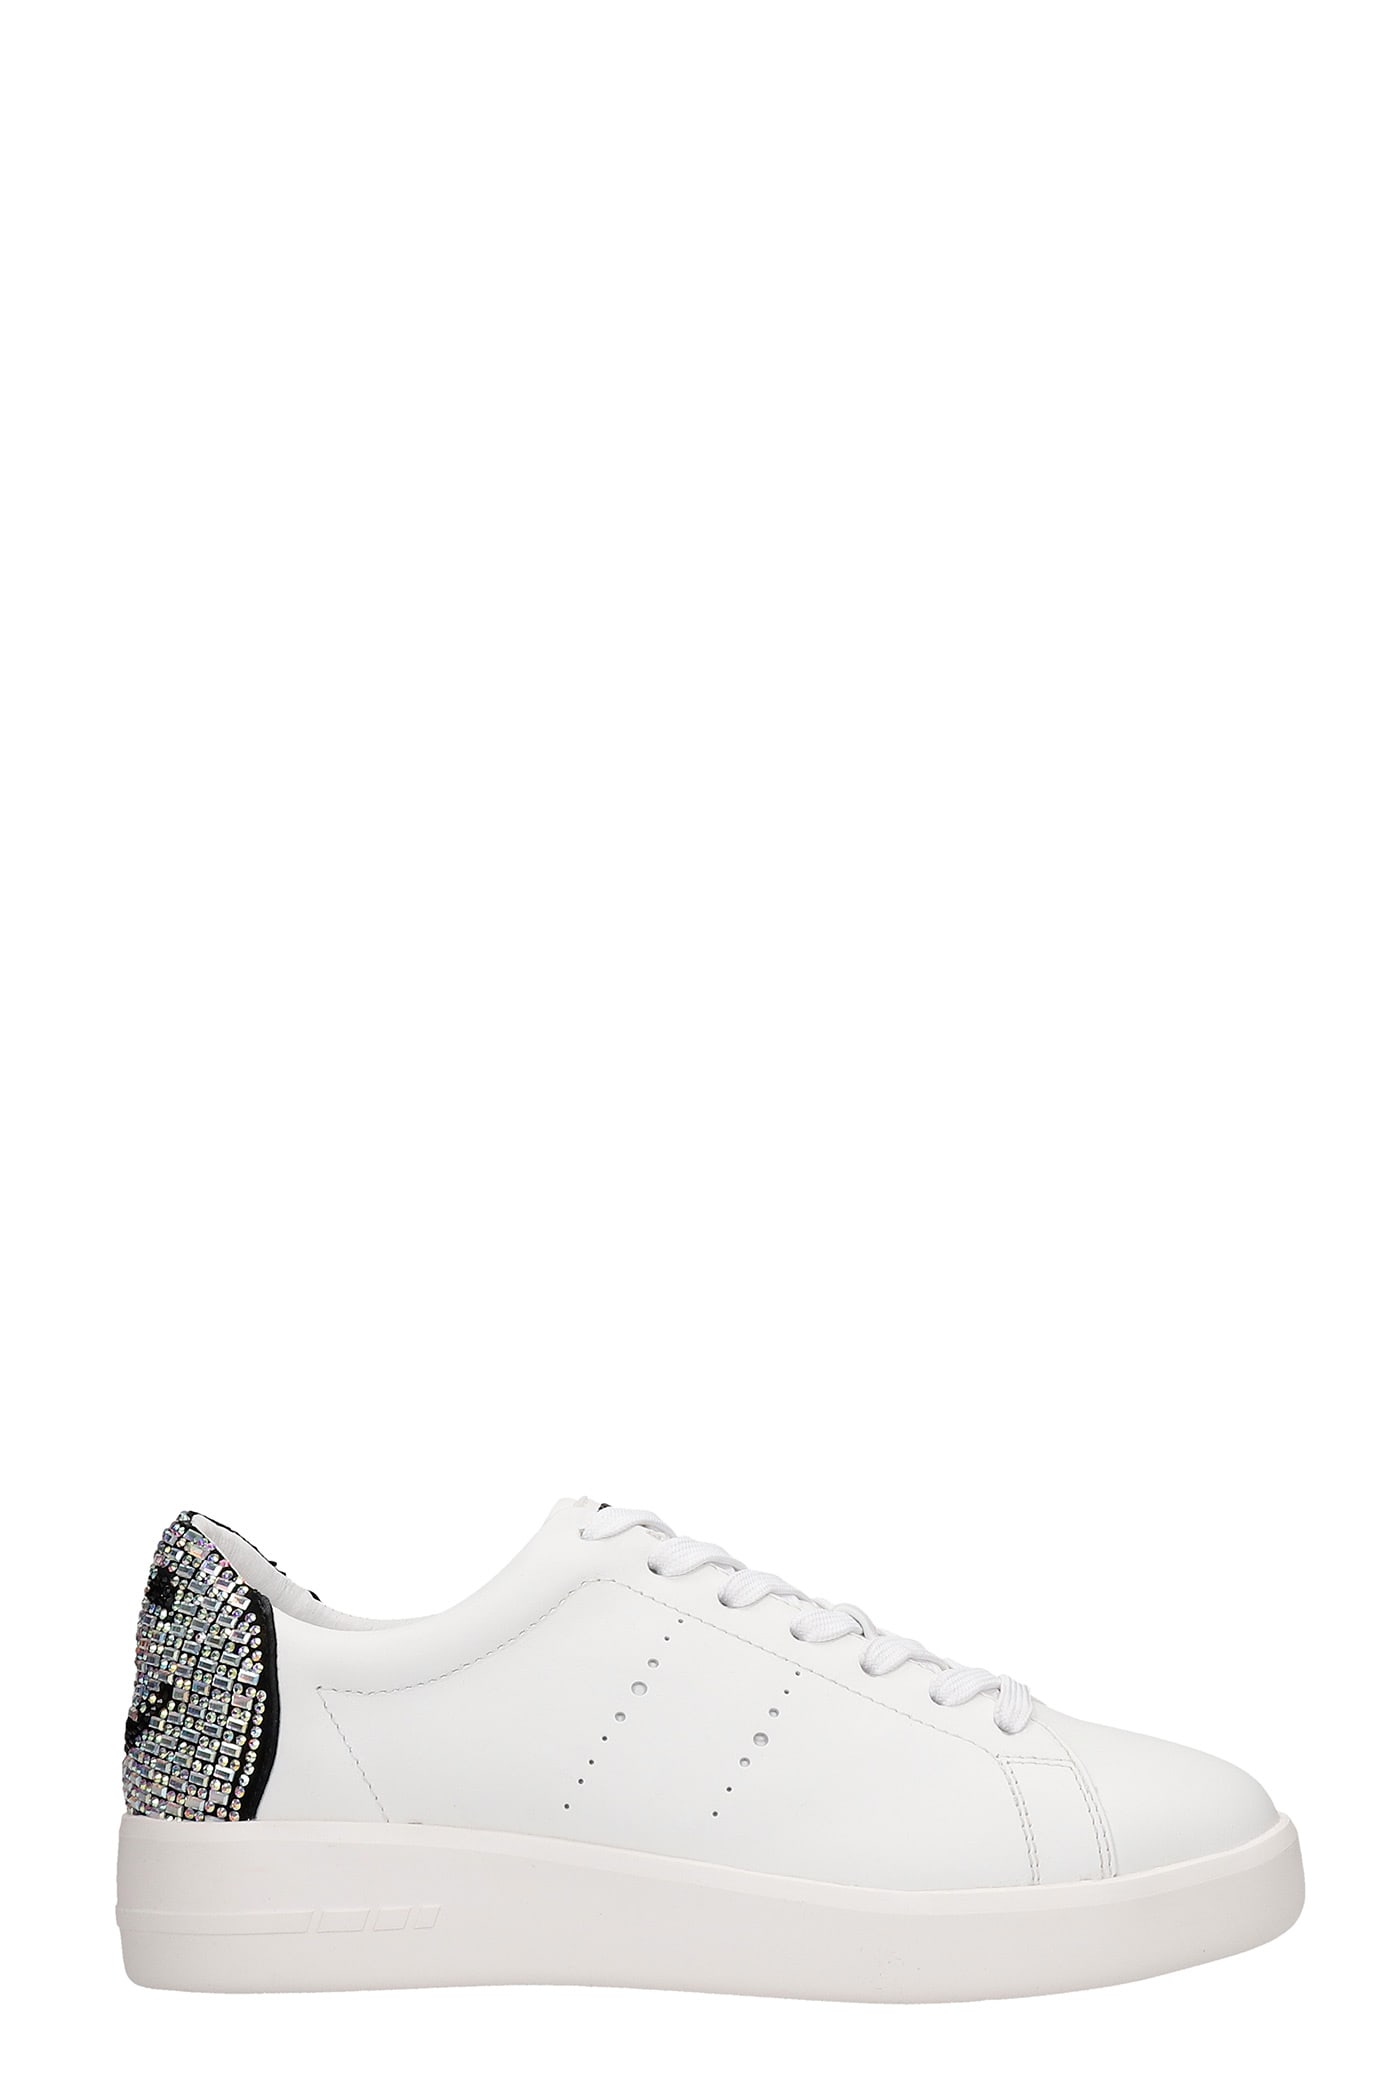 Lola Cruz Sneakers In White Leather | ModeSens